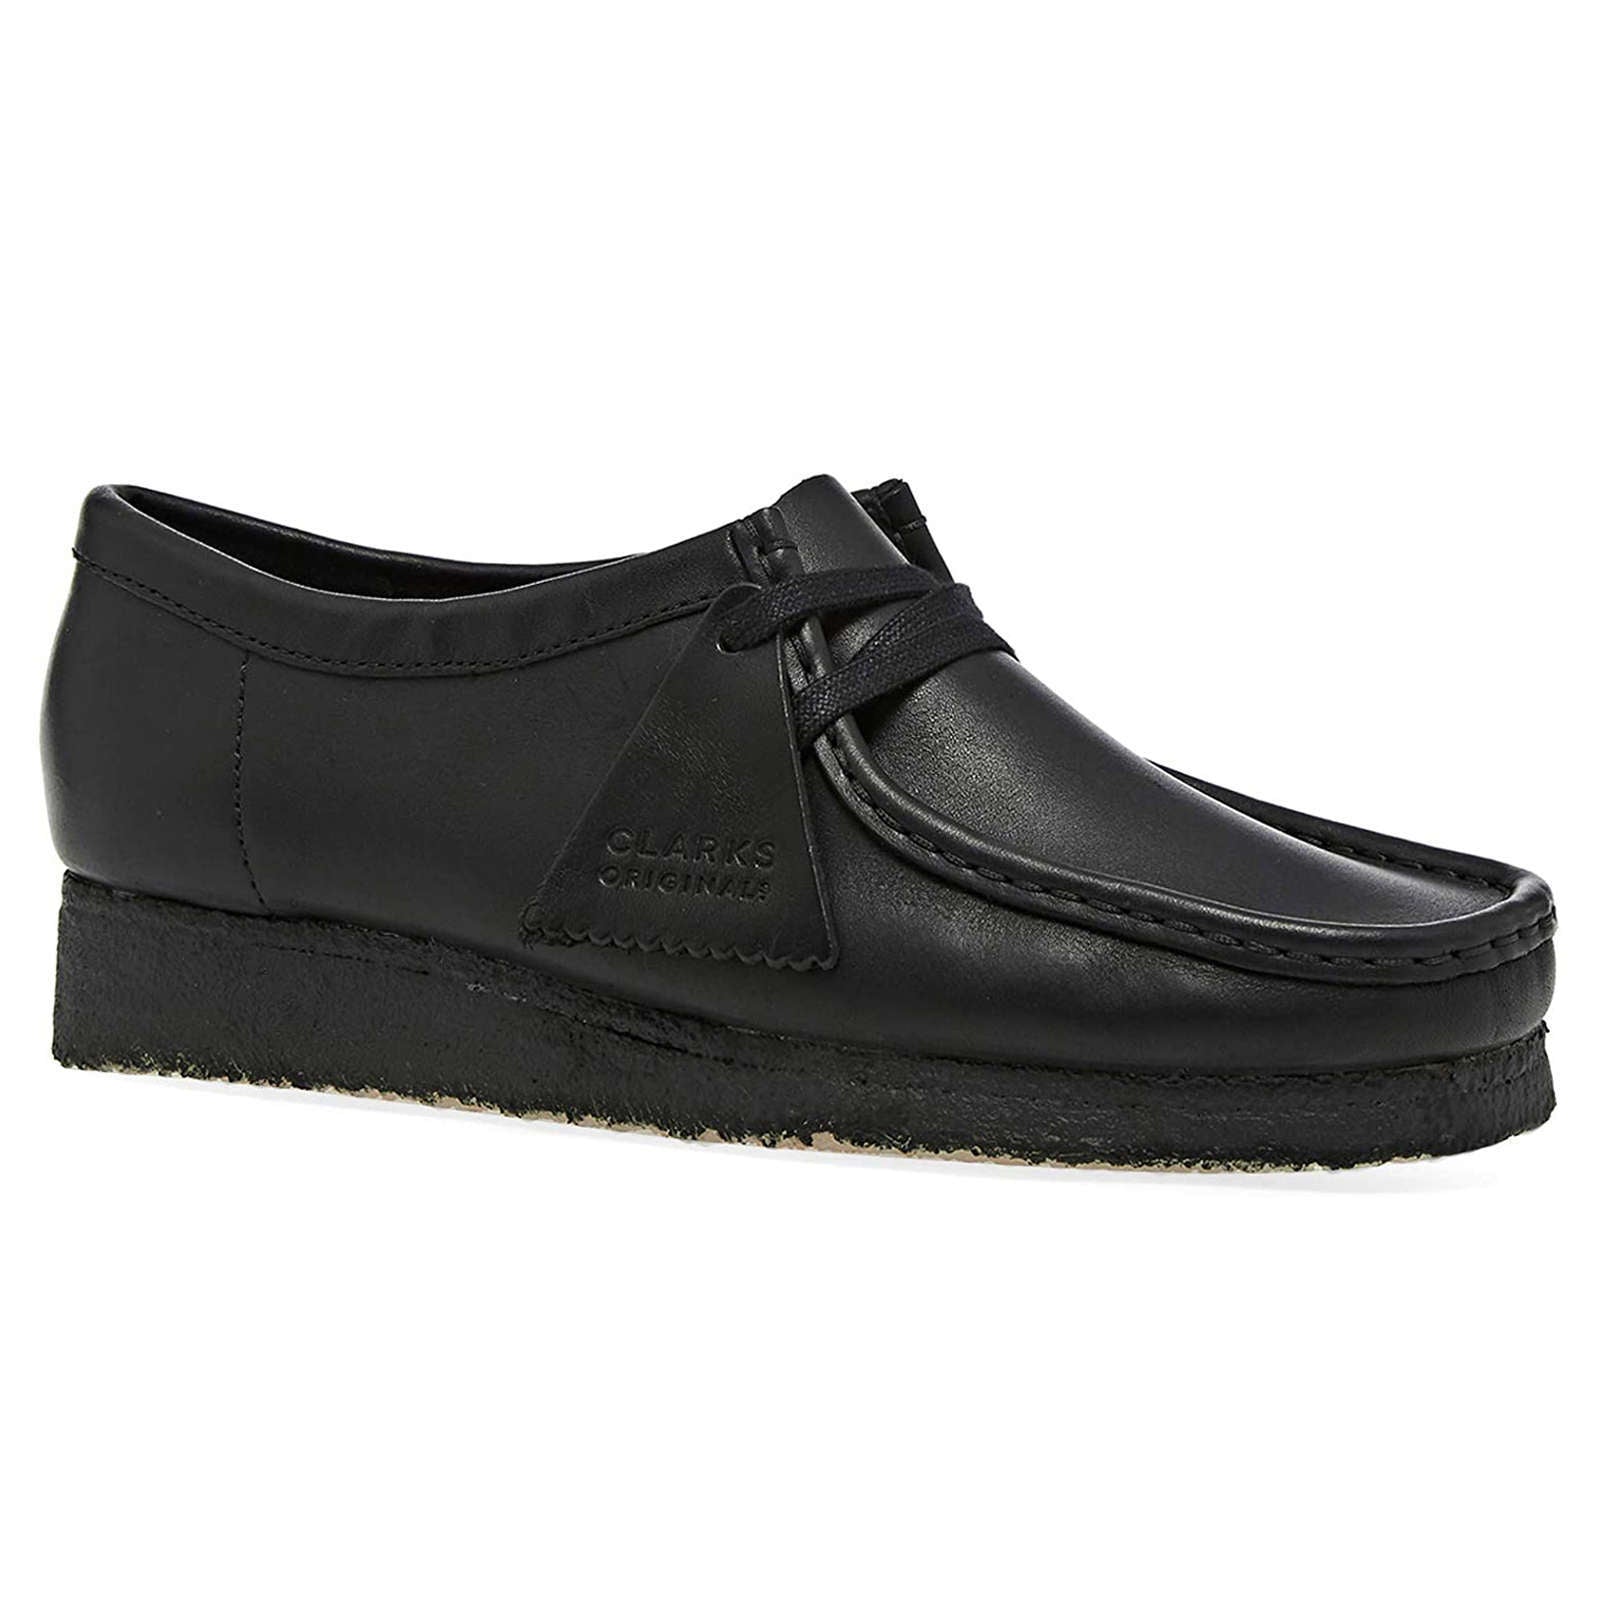 Clarks Originals Wallabee Leather Women's Shoes#color_black